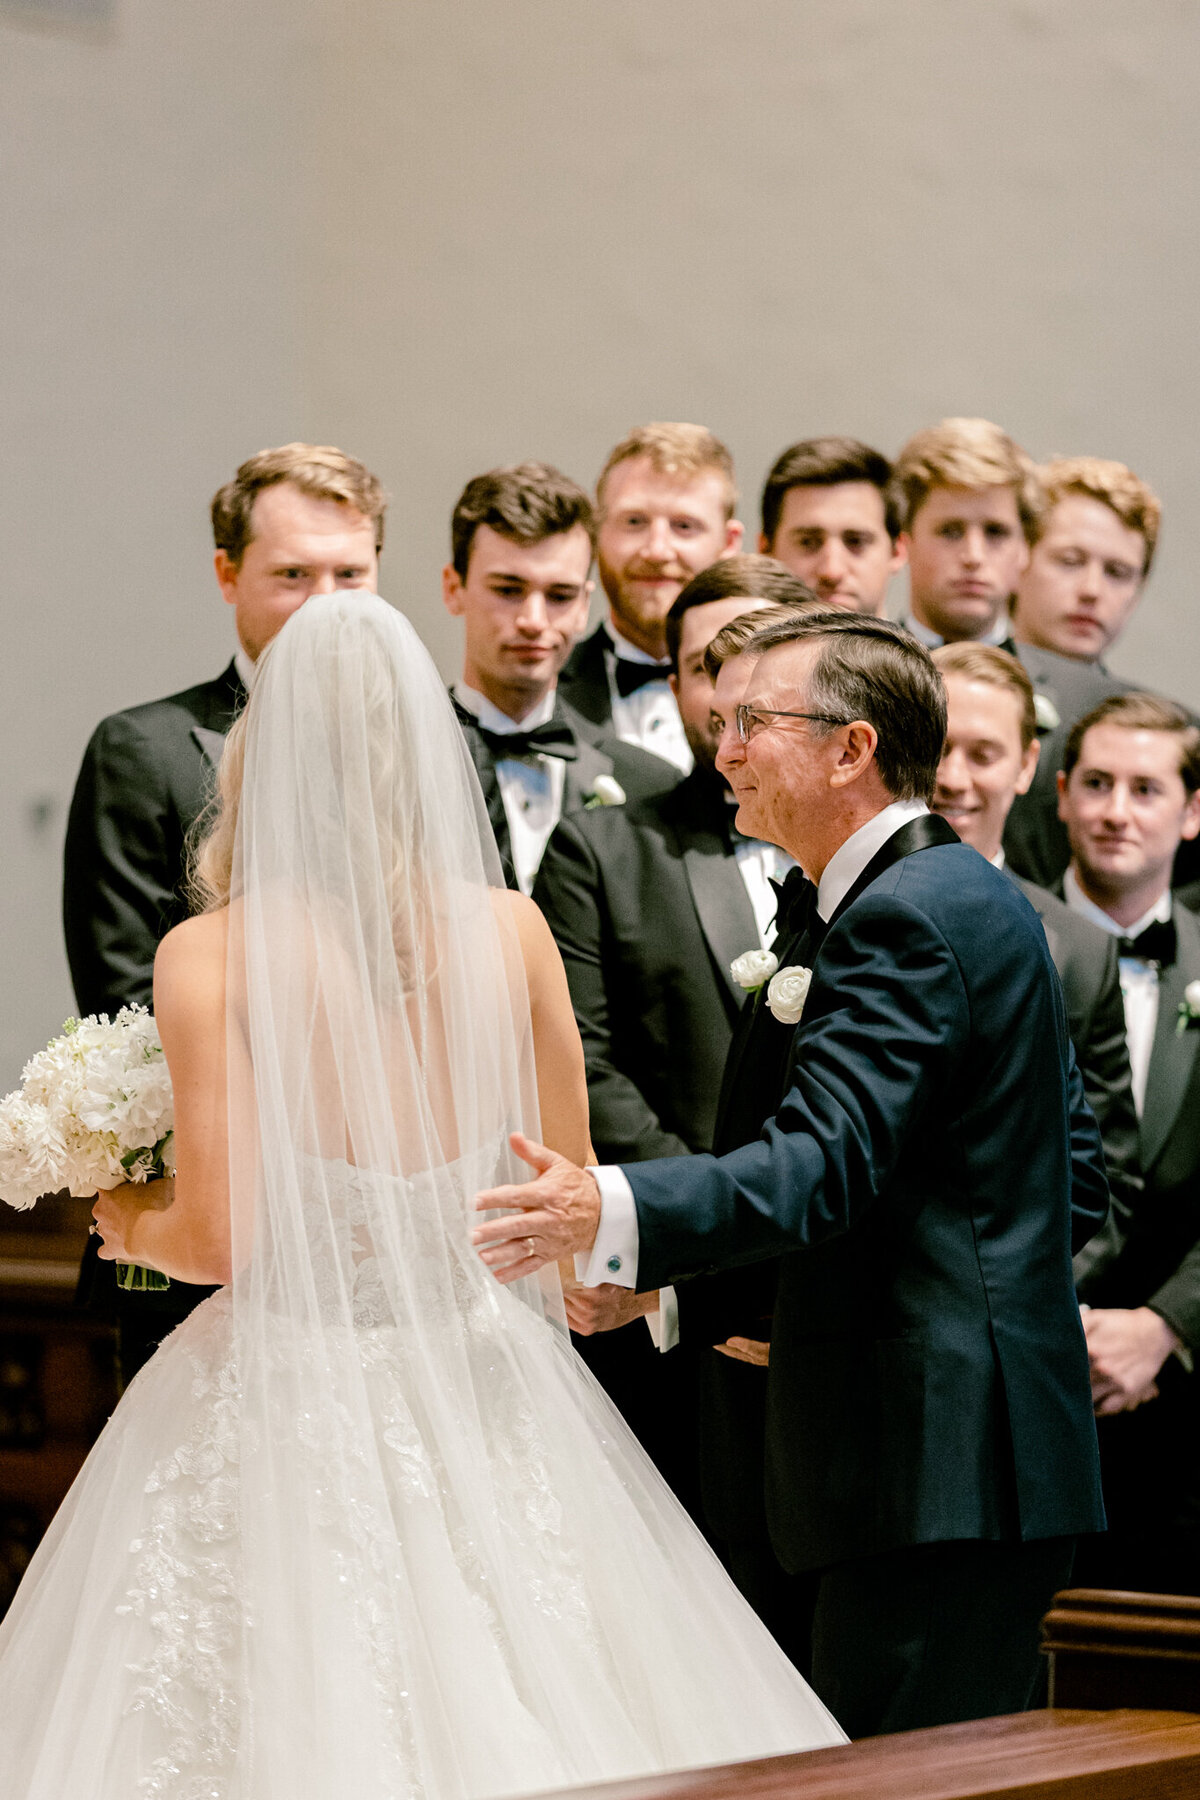 Shelby & Thomas's Wedding at HPUMC The Room on Main | Dallas Wedding Photographer | Sami Kathryn Photography-118